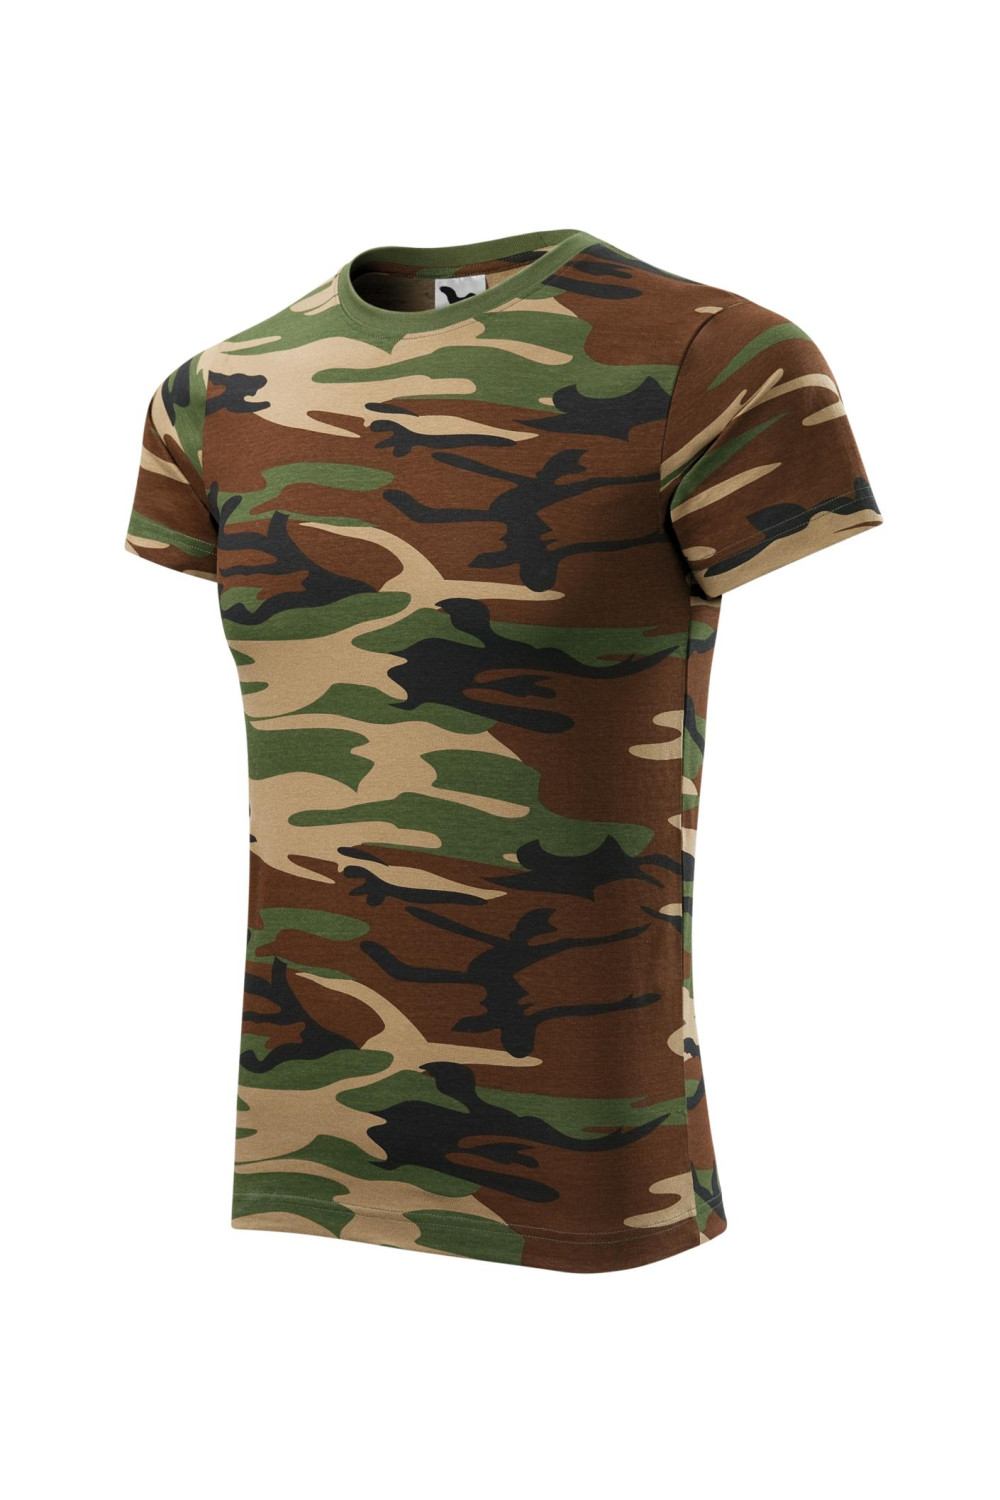 CAMOUFLAGE 144 Koszulka męska 100% bawełna koszulki / T-shirt Koszulka męska 100% bawełna koszulki / T-shirt camouflage brown